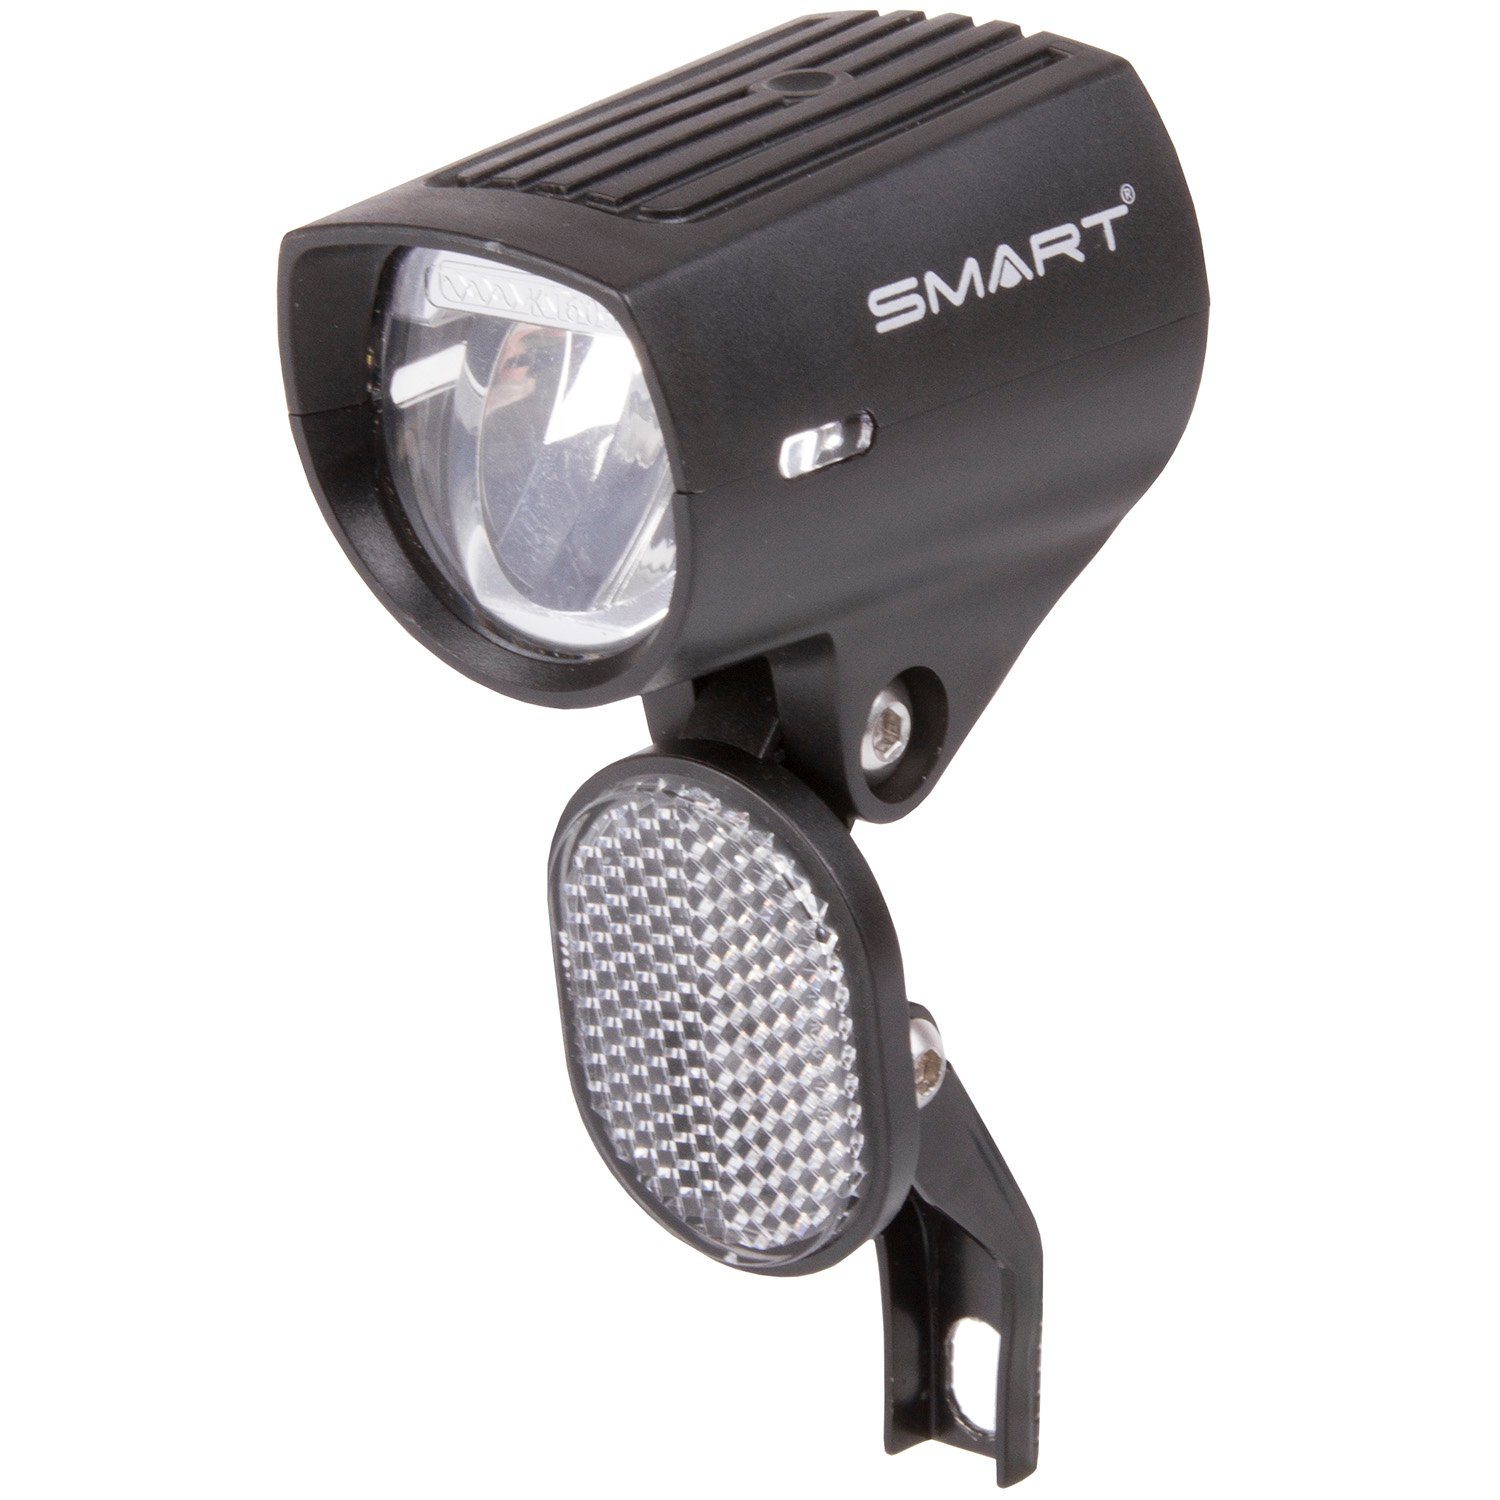 Smart Fahrrad-Frontlicht SMART D E E Bike Frontlicht Scheinwerfer